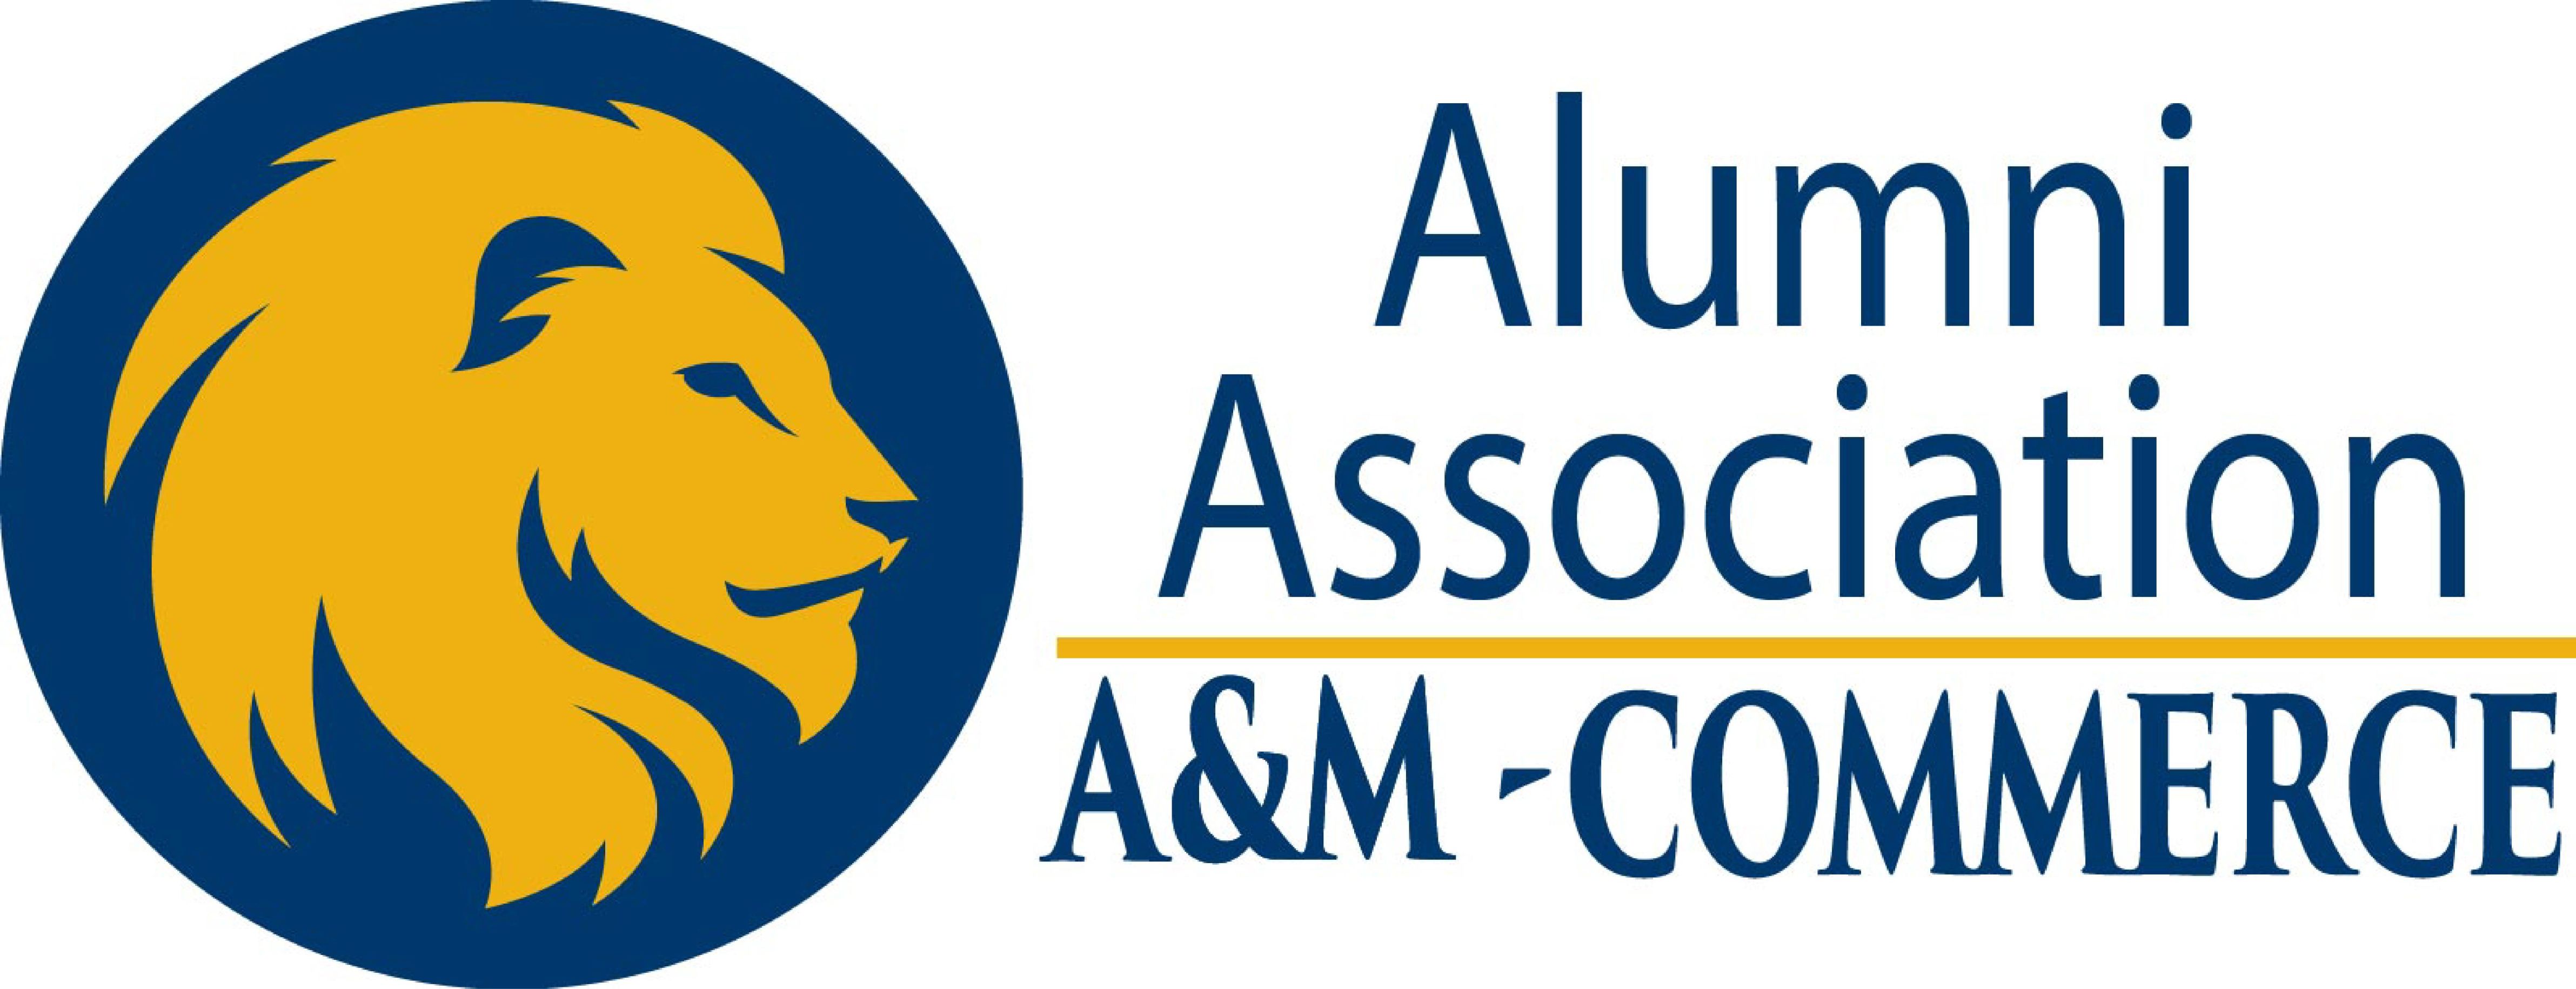 Alumni Association Life Time Membership